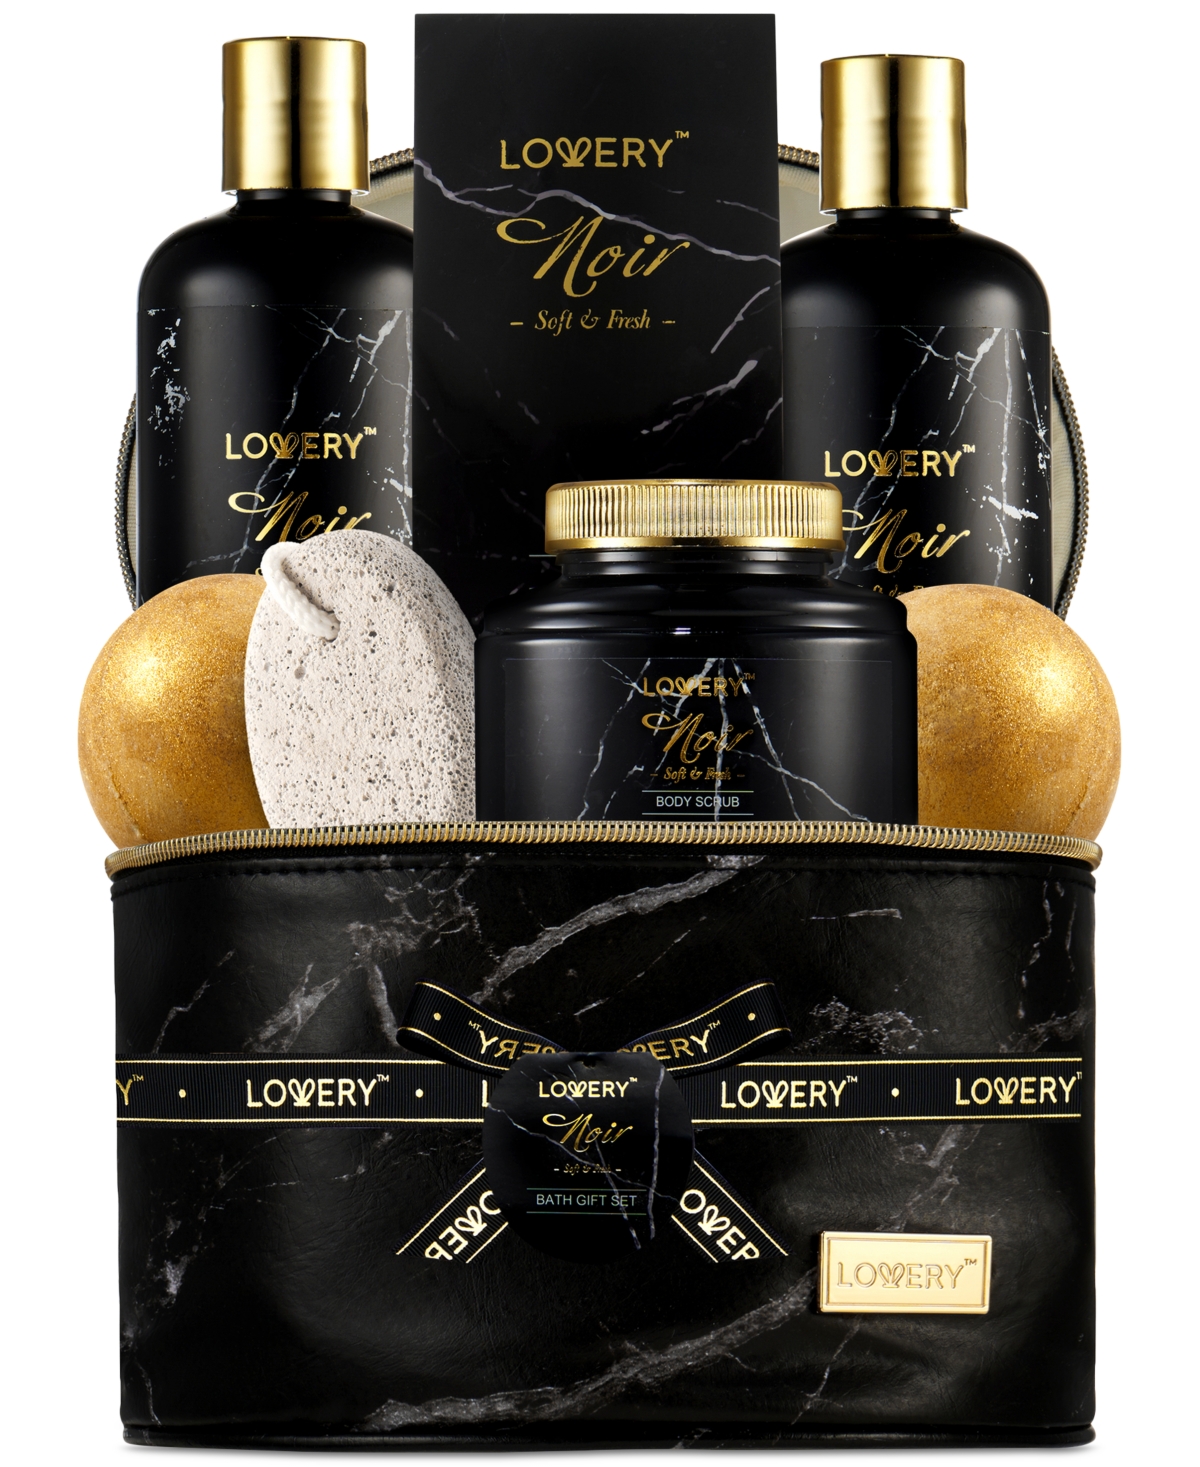 Lovery 7-pc. Noir Luxury Body-care Gift Set